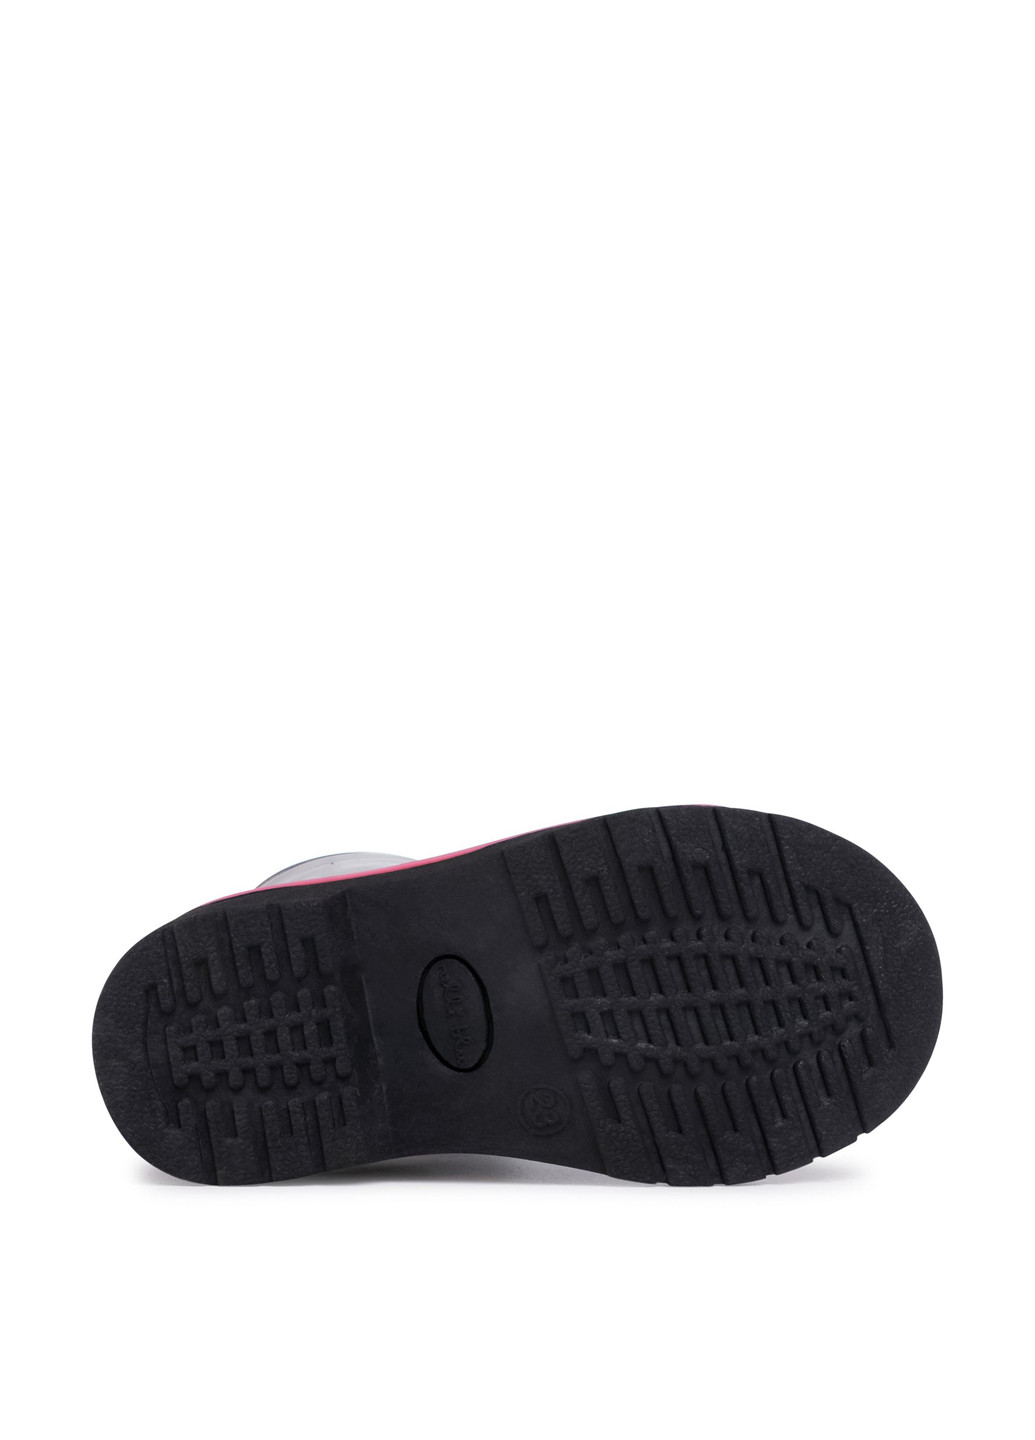 Черные кэжуал осенние черевики nelli blu cm170106-34 Nelli Blu